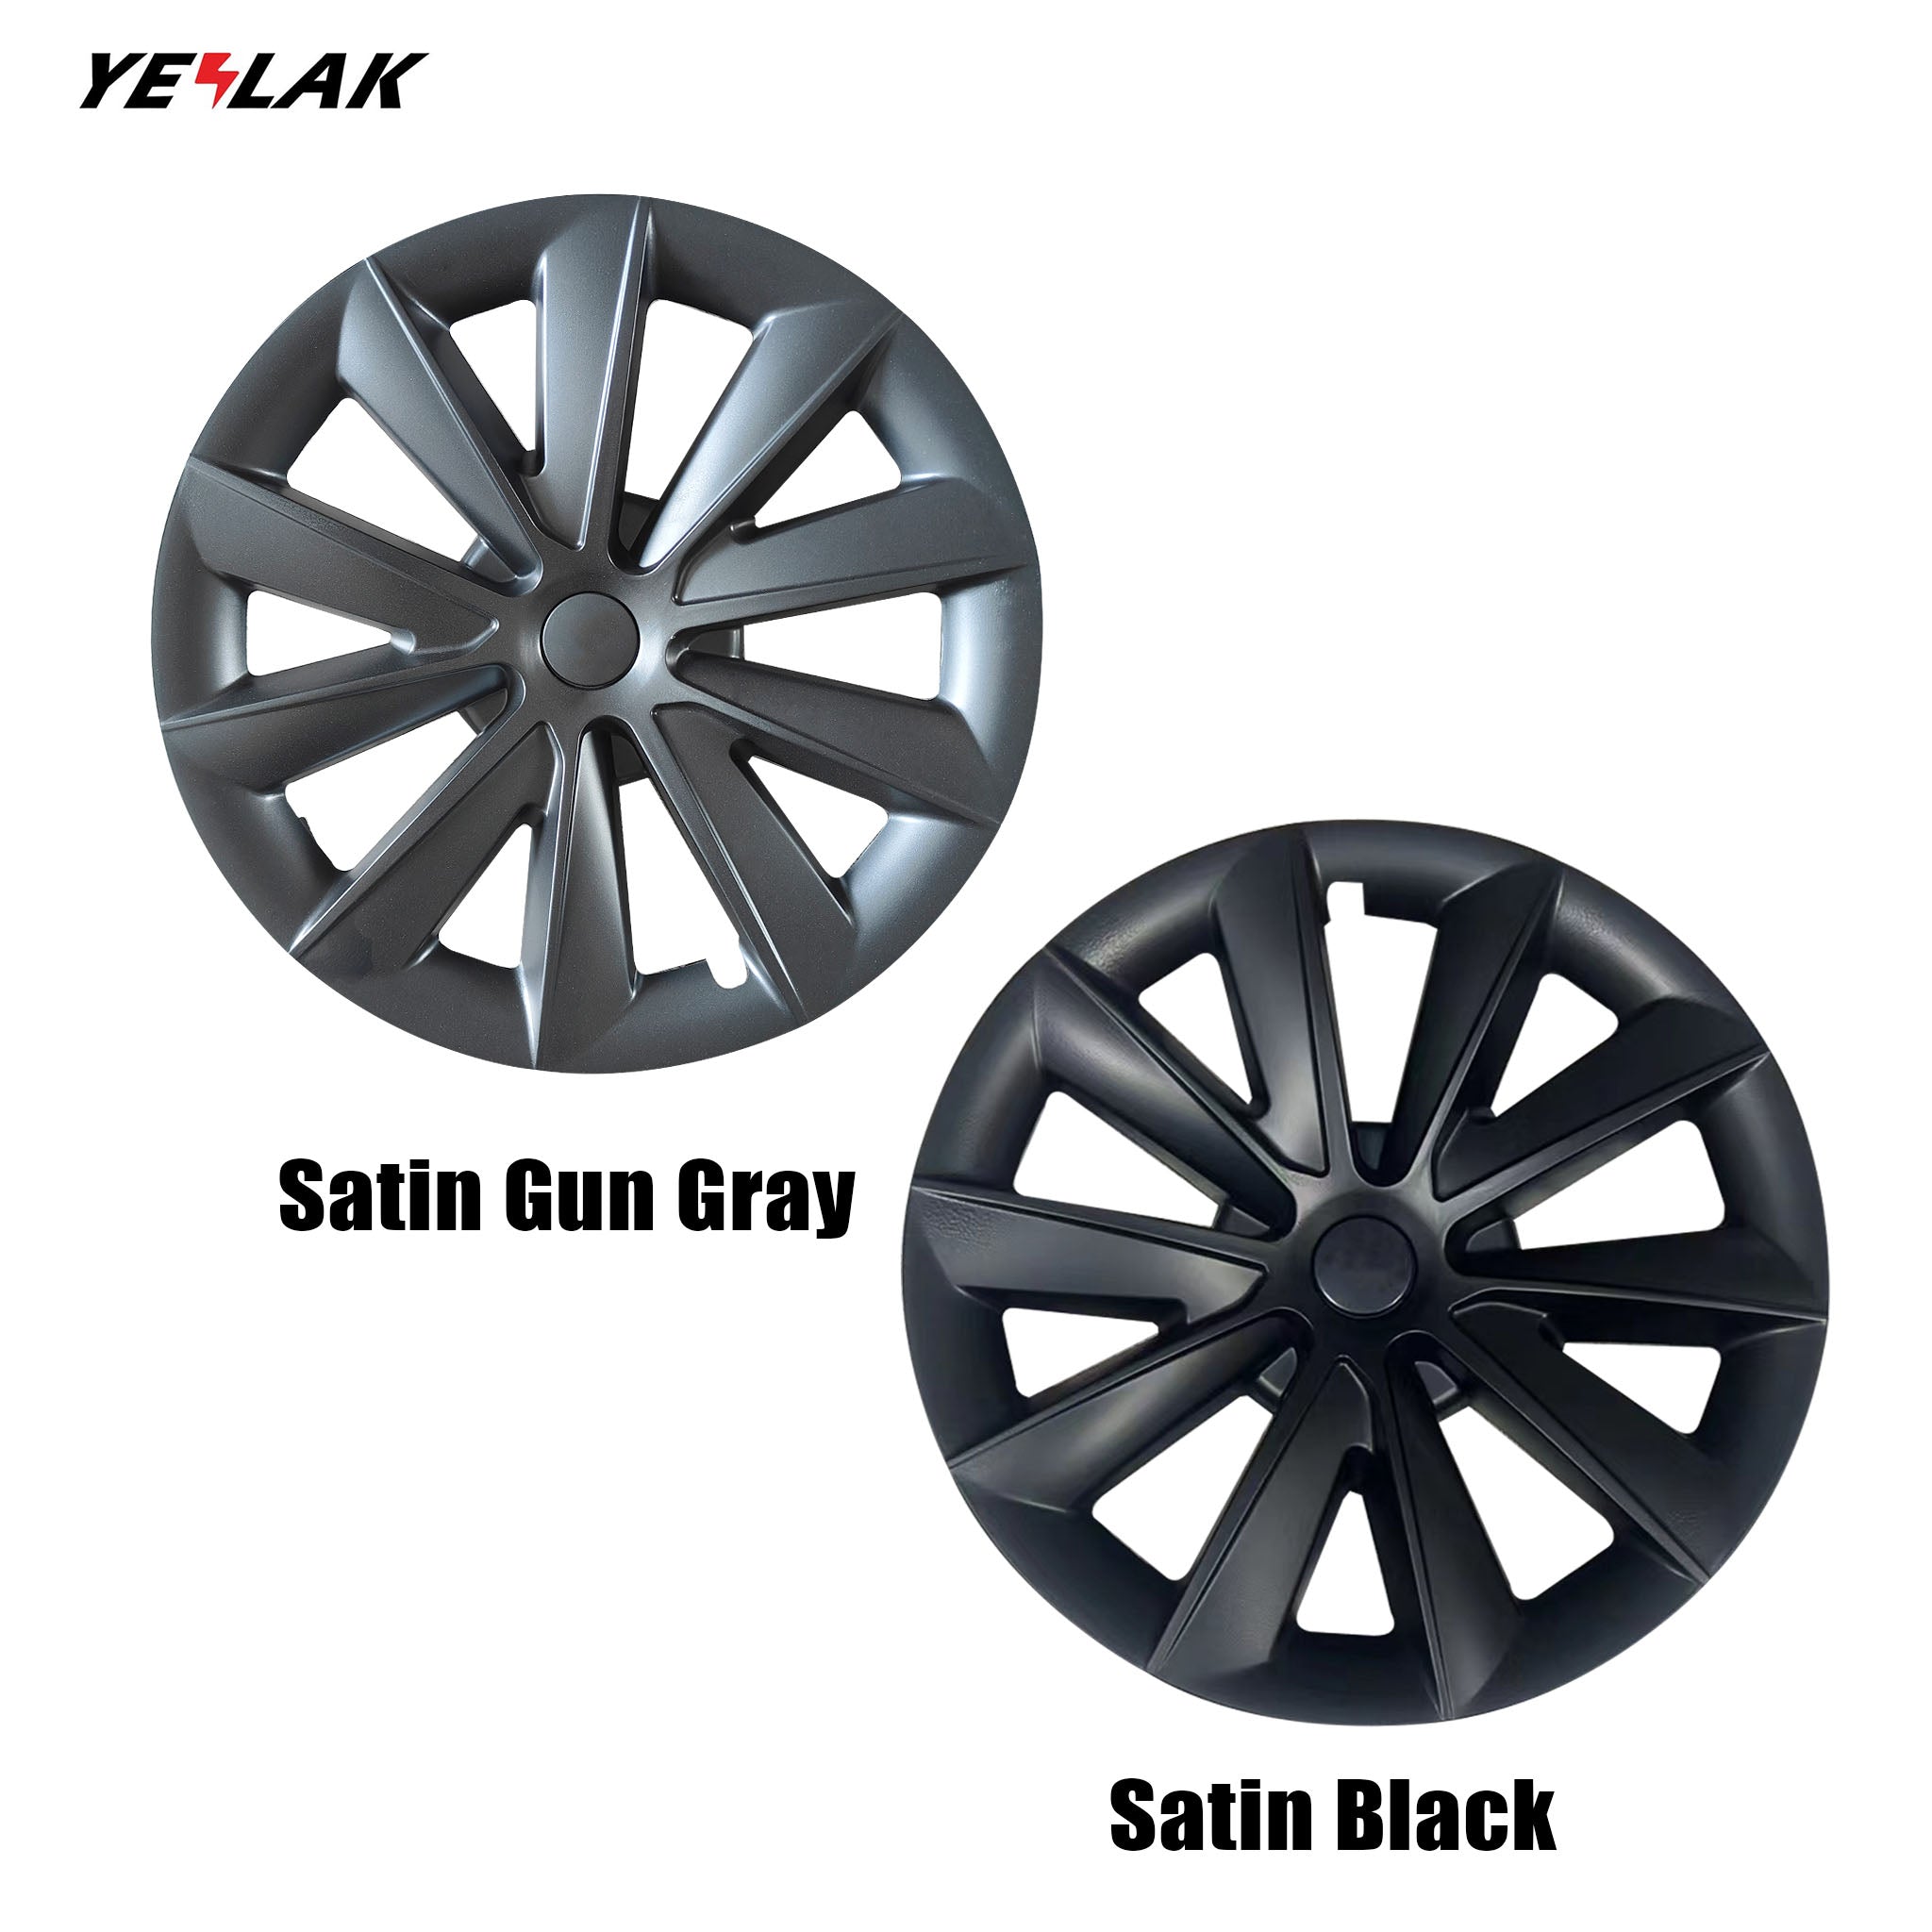 Wheel Covers for Model 3 – Yeslak